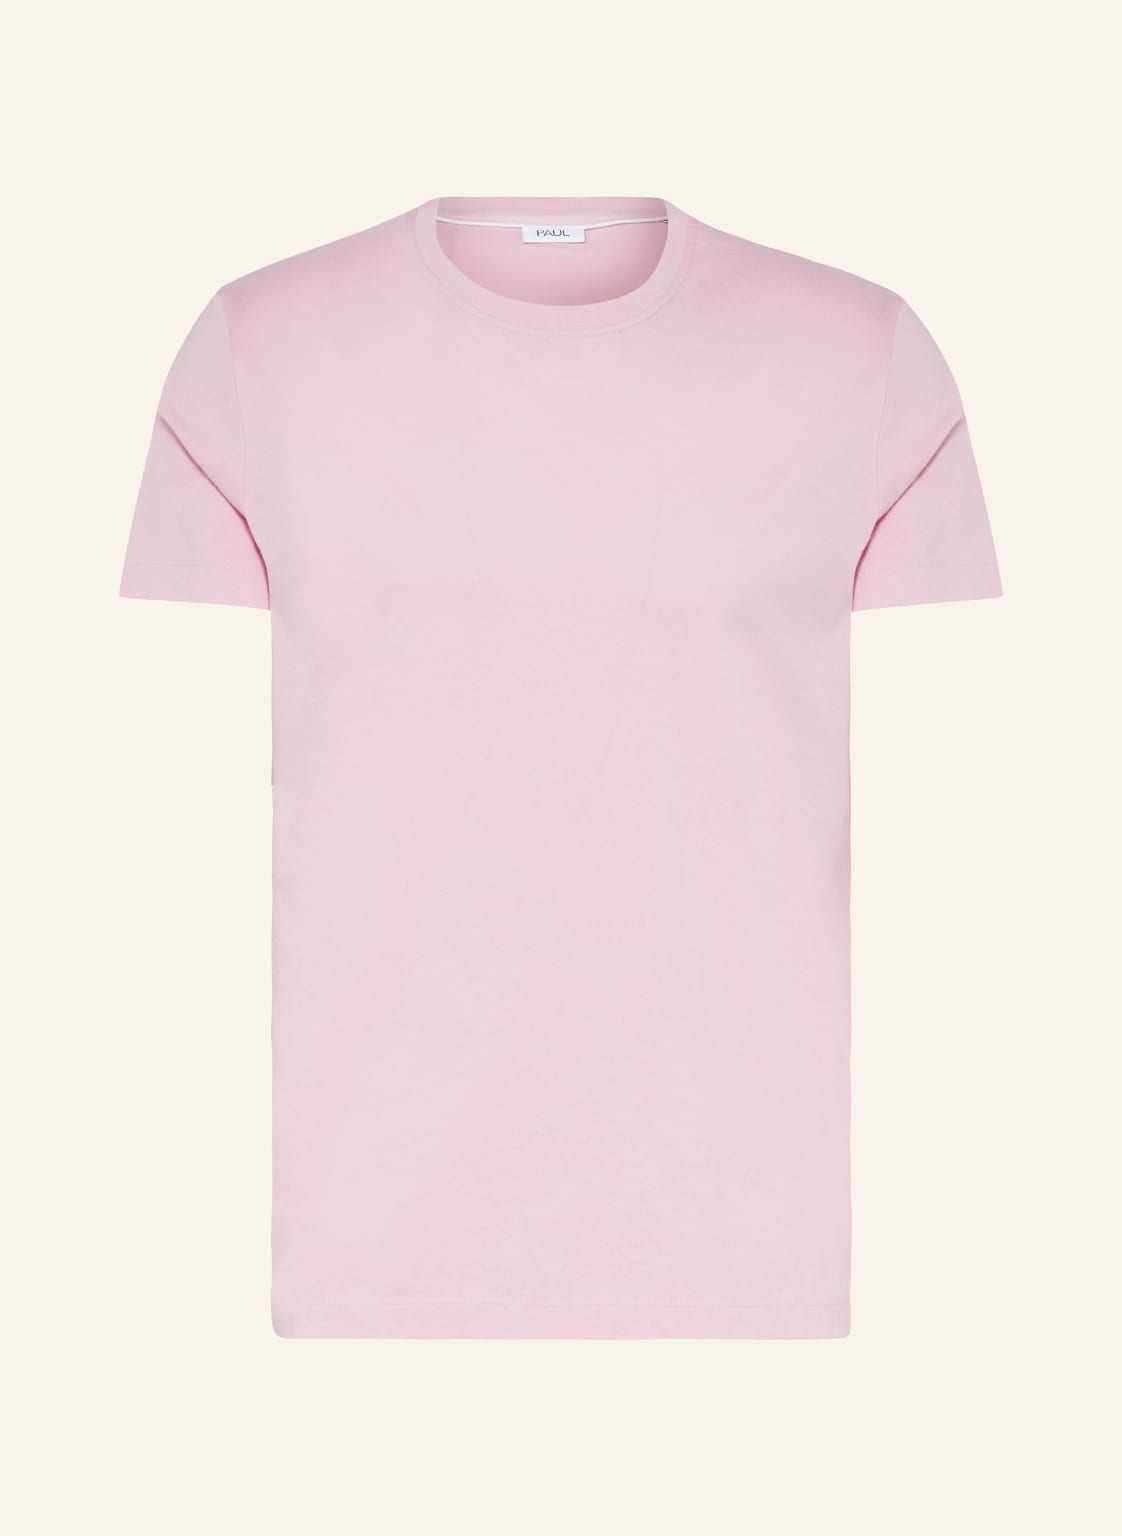 Paul T-Shirt rosa von PAUL